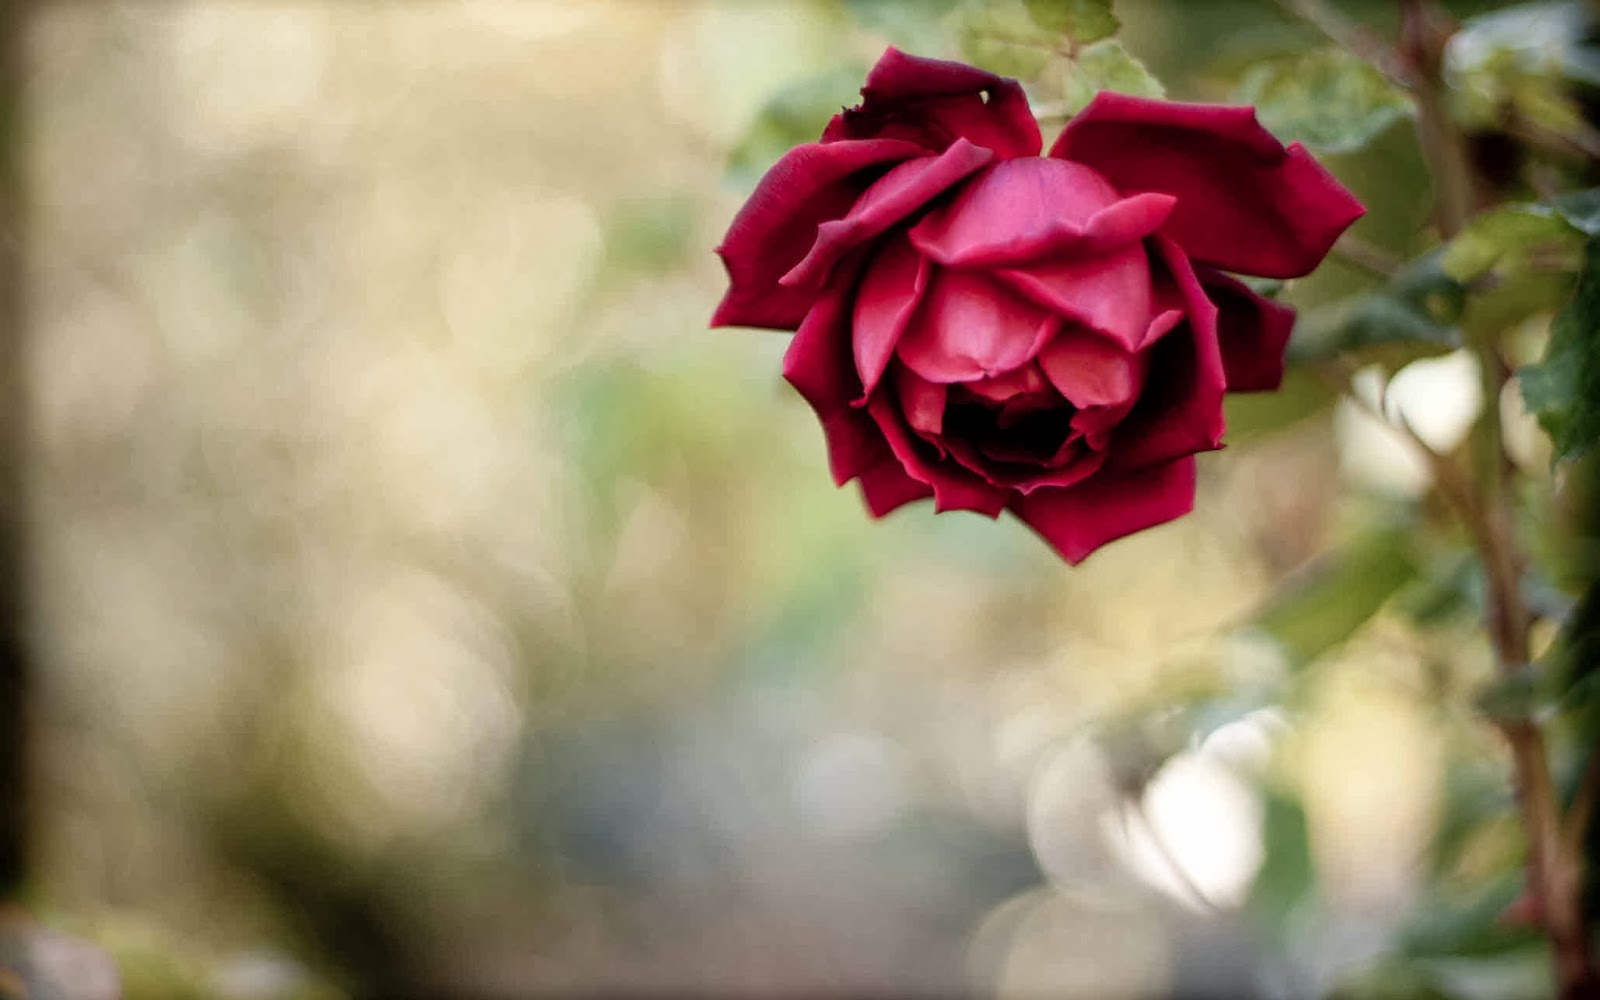 rose flower wallpaper hd free download,flower,garden roses,red,petal,nature